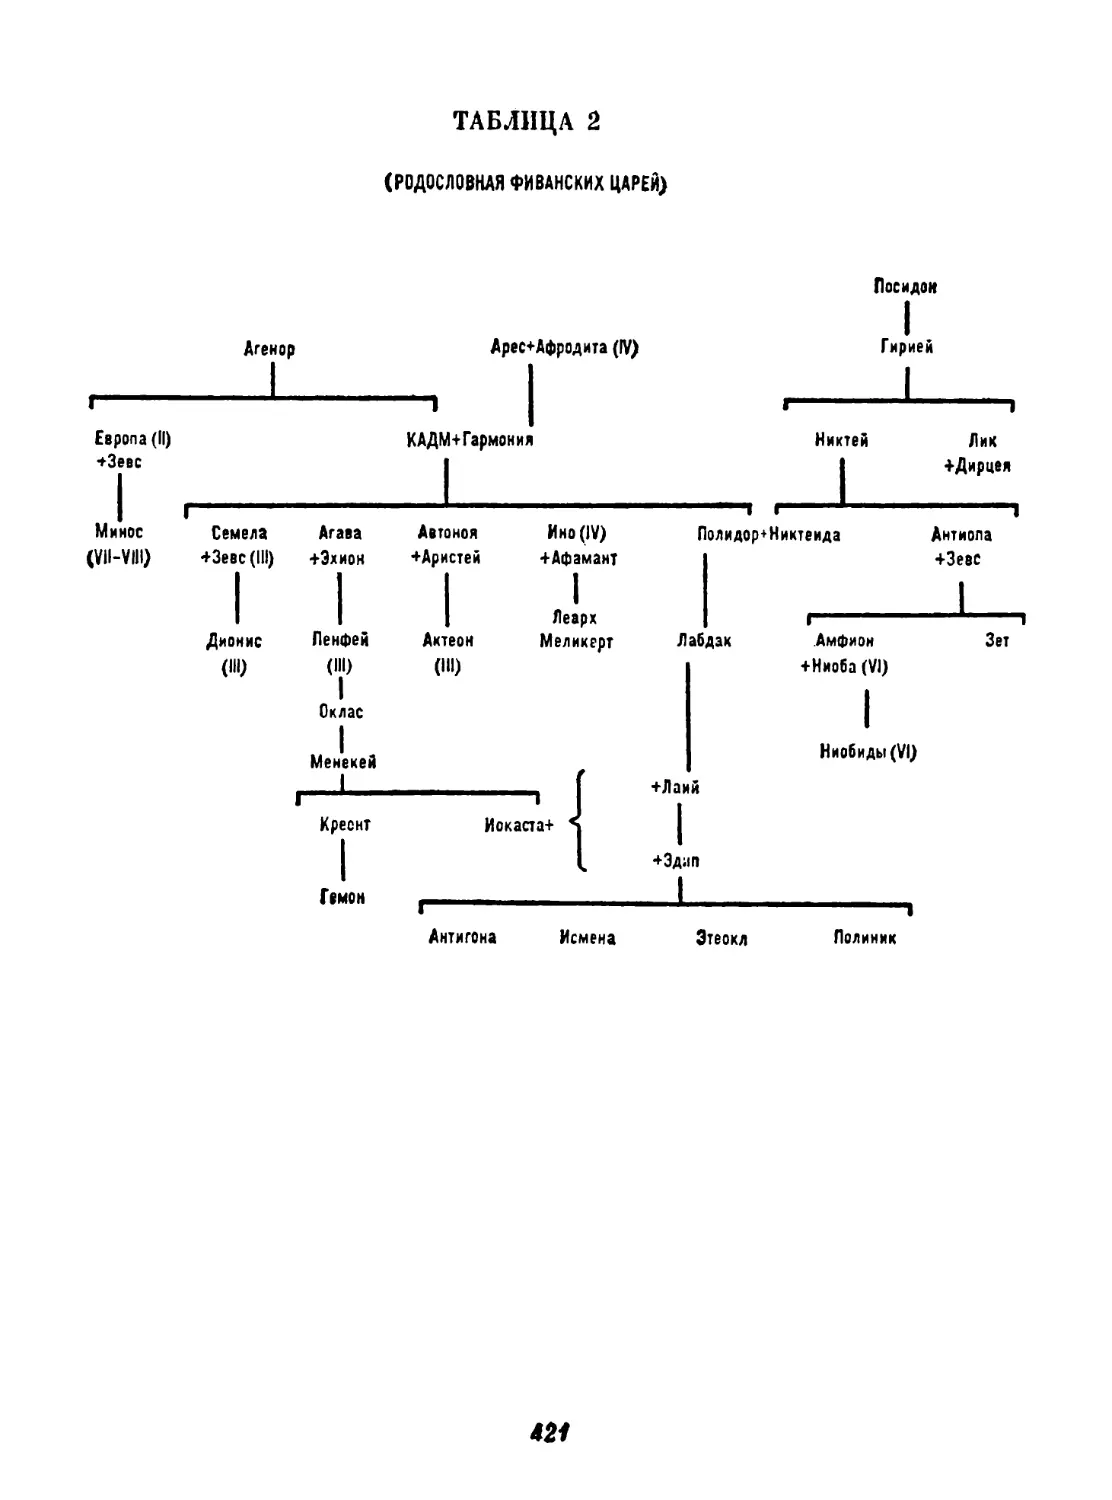 Таблица 3. Родословная аргосских царей